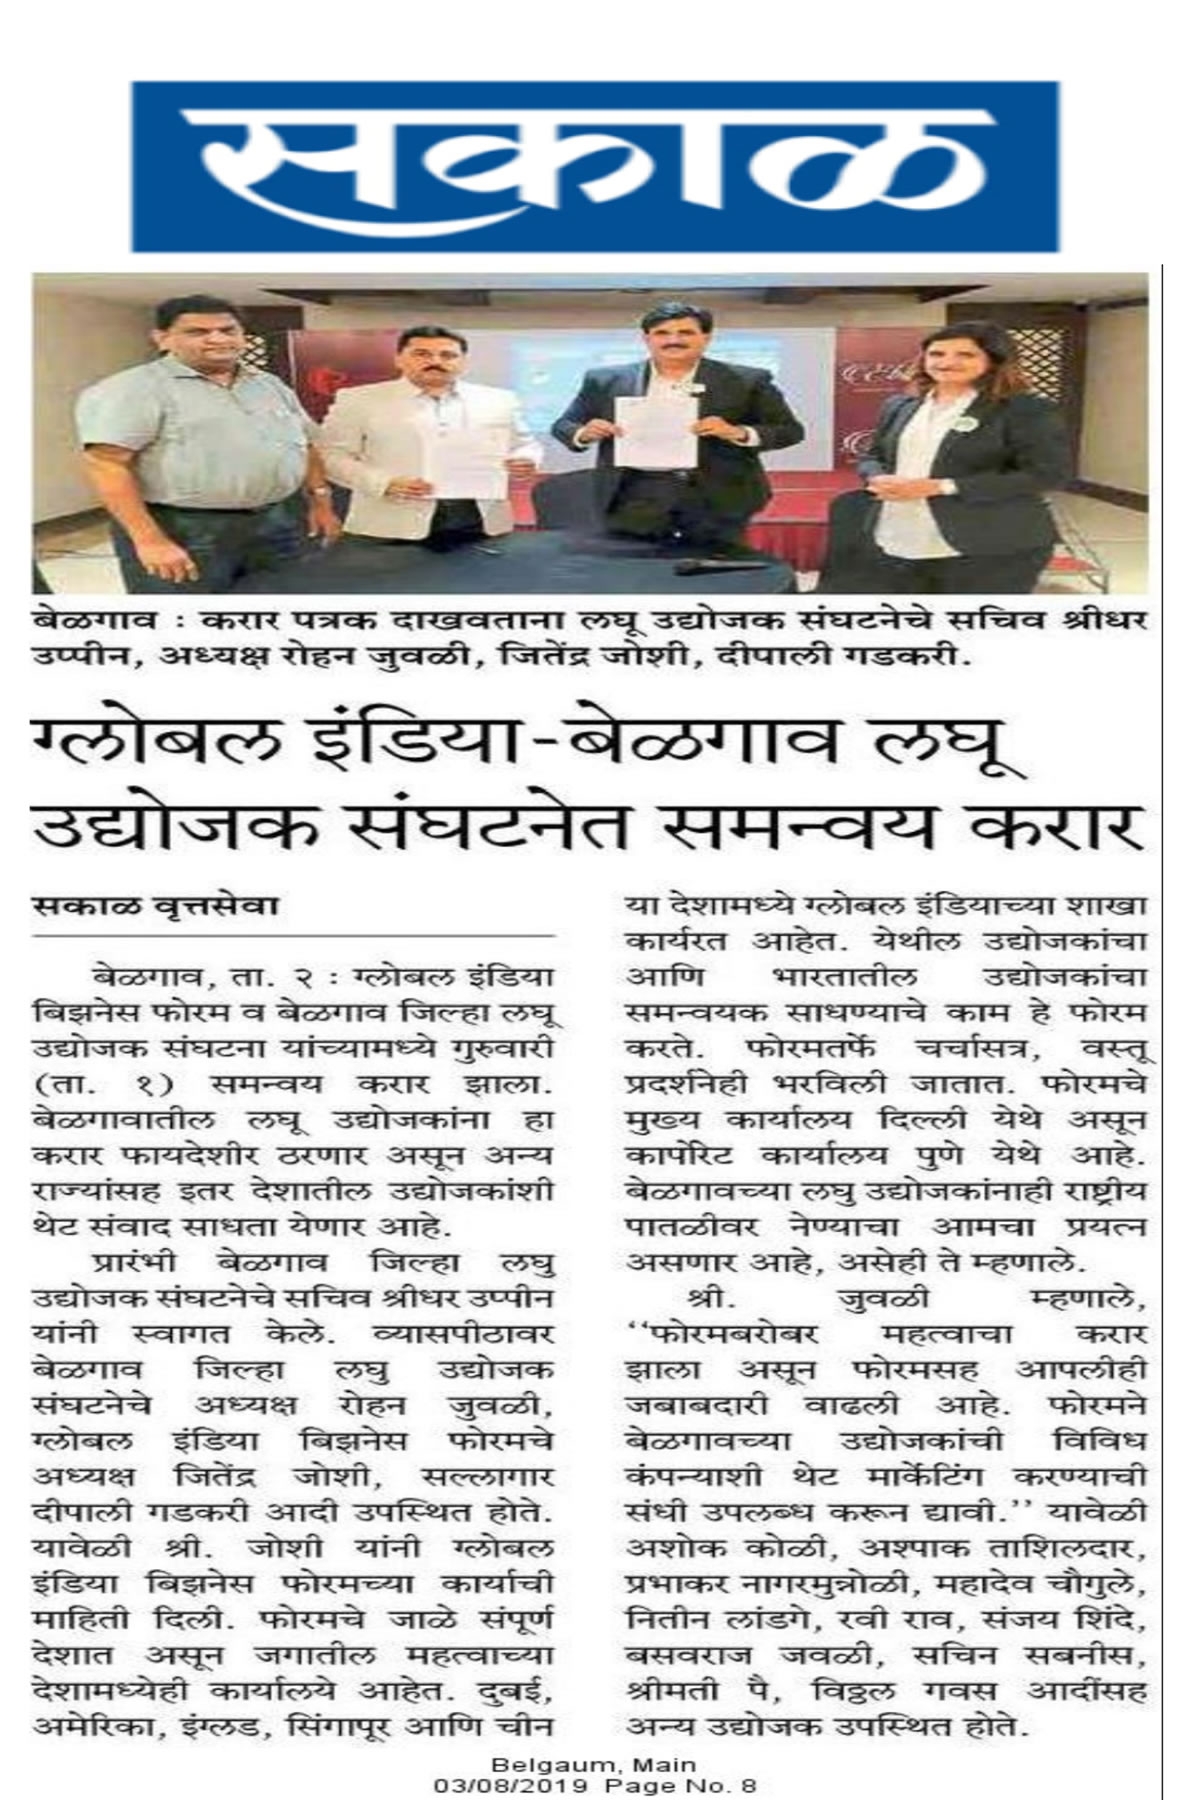 gibf-printed-media-coordination-agreement-in-global-india-belgaum-03-august-2019